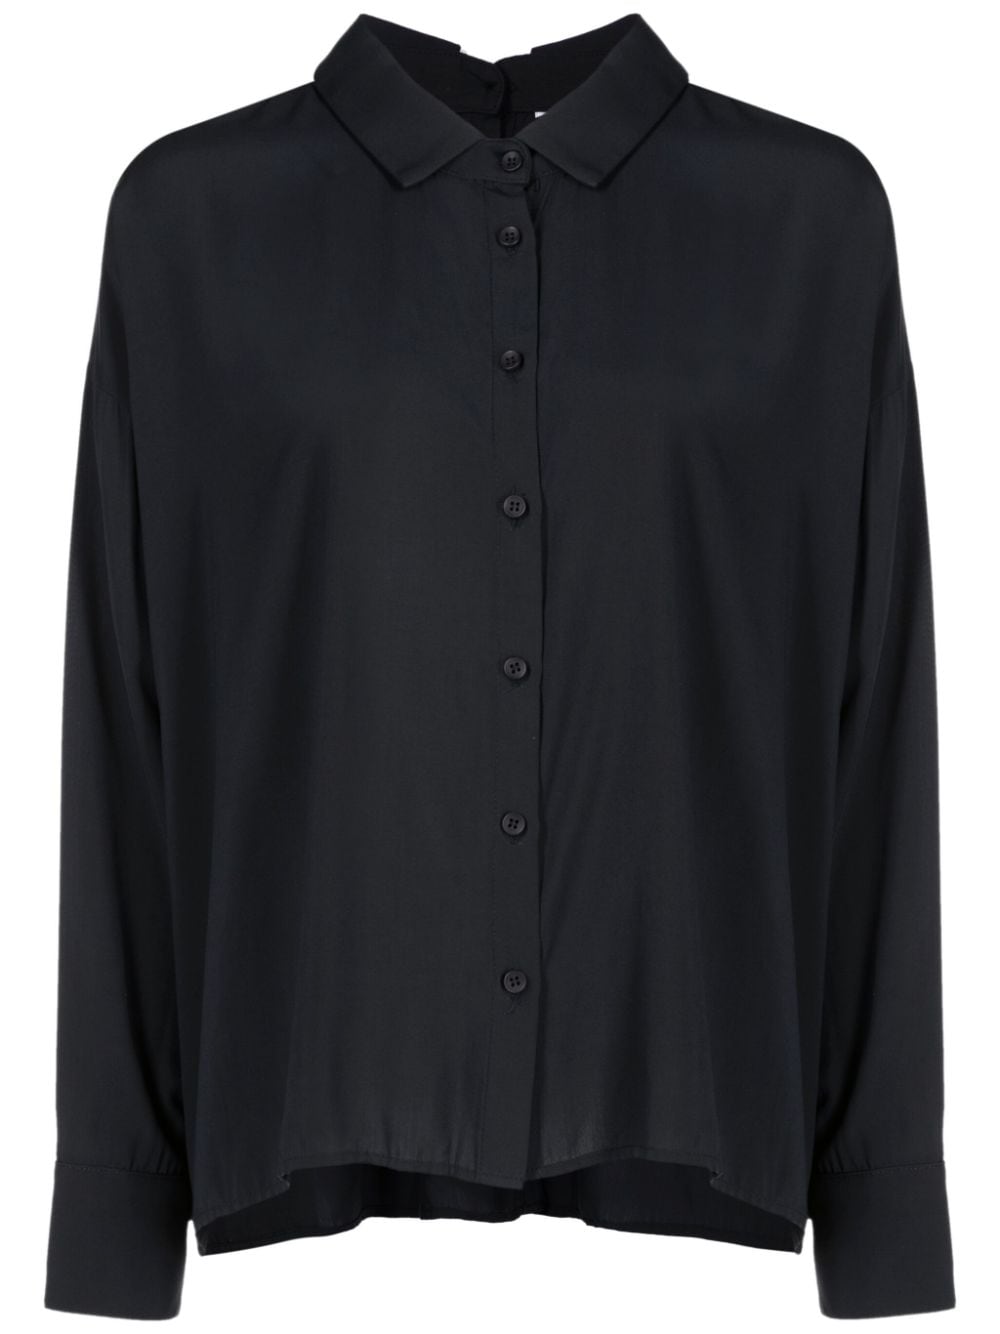 Uma | Raquel Davidowicz long-sleeved button-up shirt - Black von Uma | Raquel Davidowicz